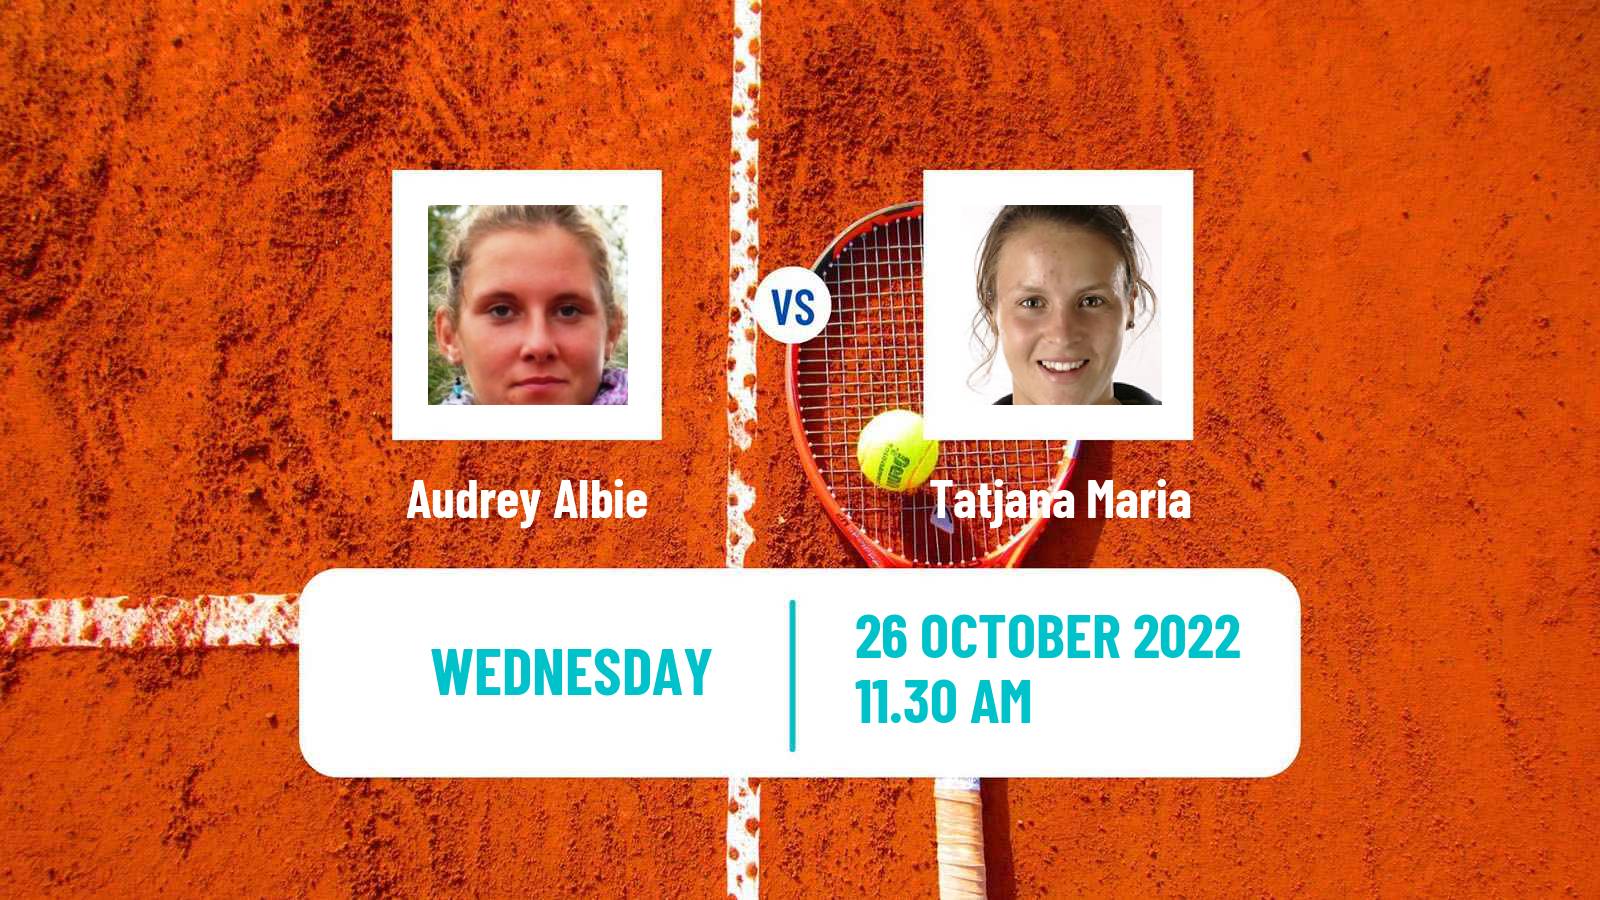 Tennis ITF Tournaments Audrey Albie - Tatjana Maria